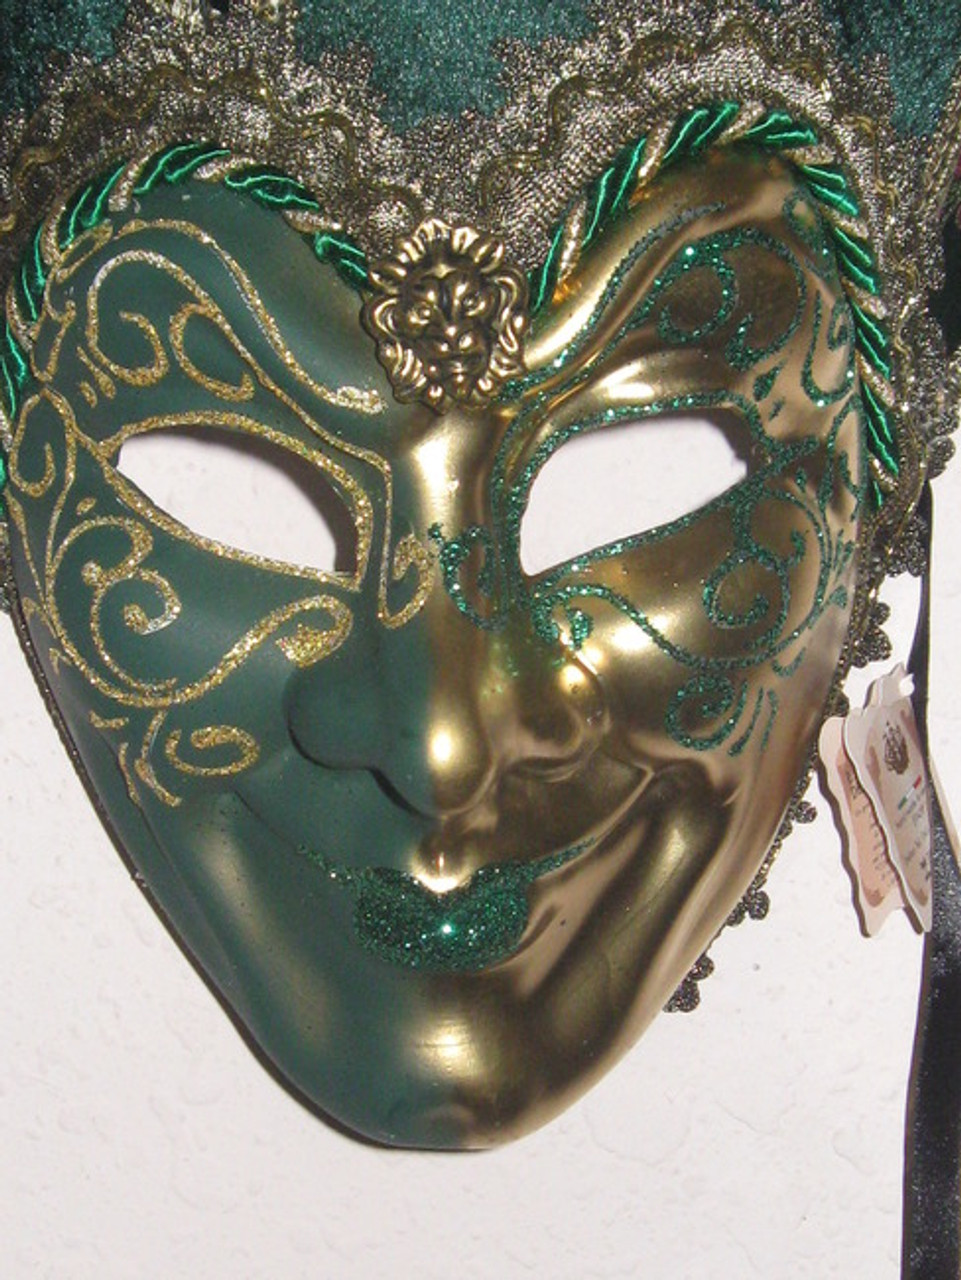 Green Joker Lillo Venetian Masquerade Mask SKU 383jgr - VENICE BUYS